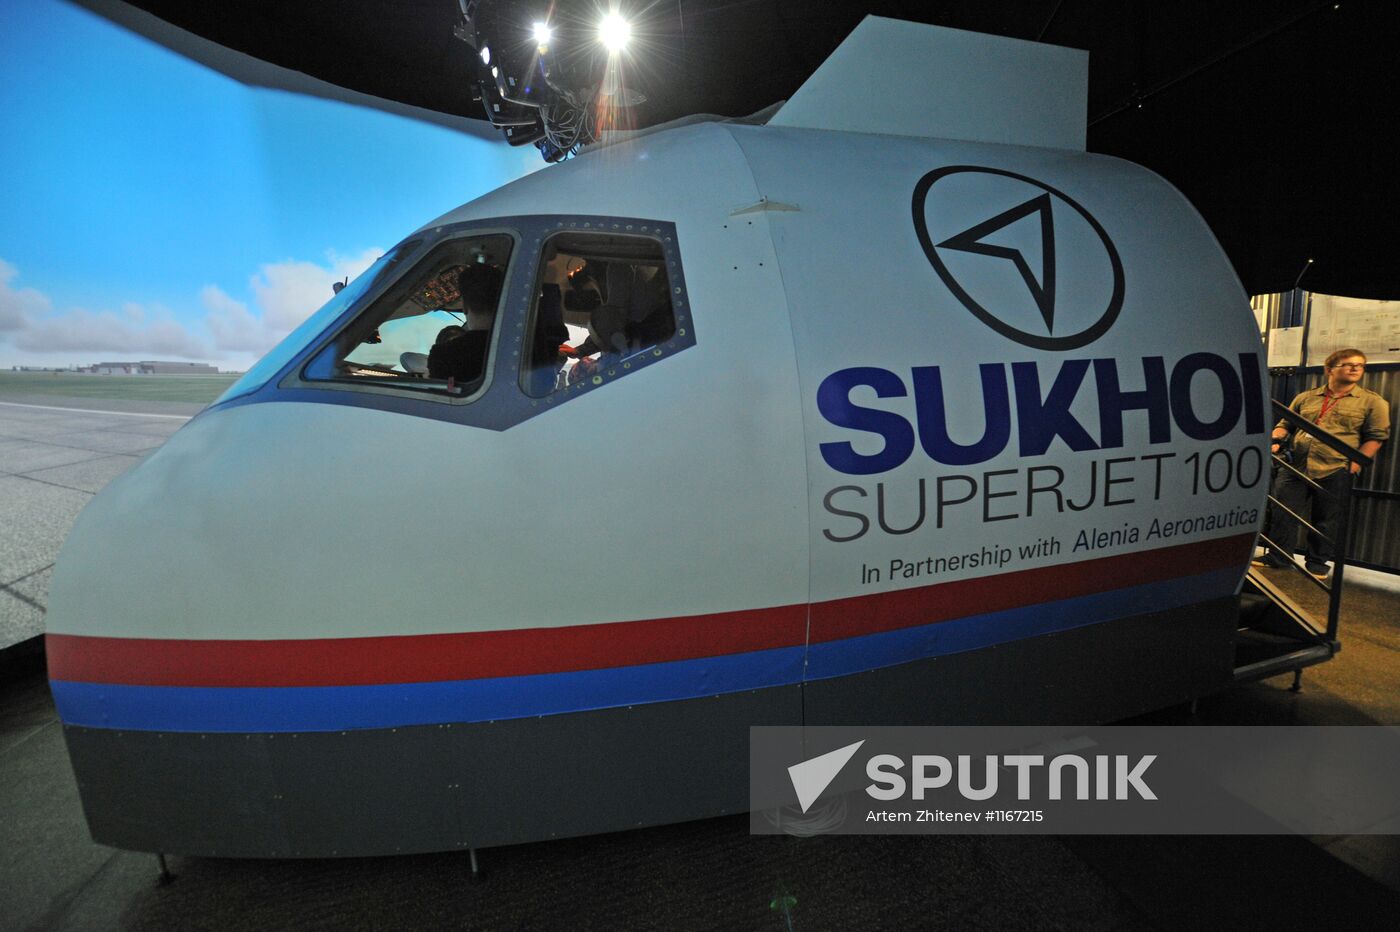 Staff personnel training center for Sukhoi Superjet 100